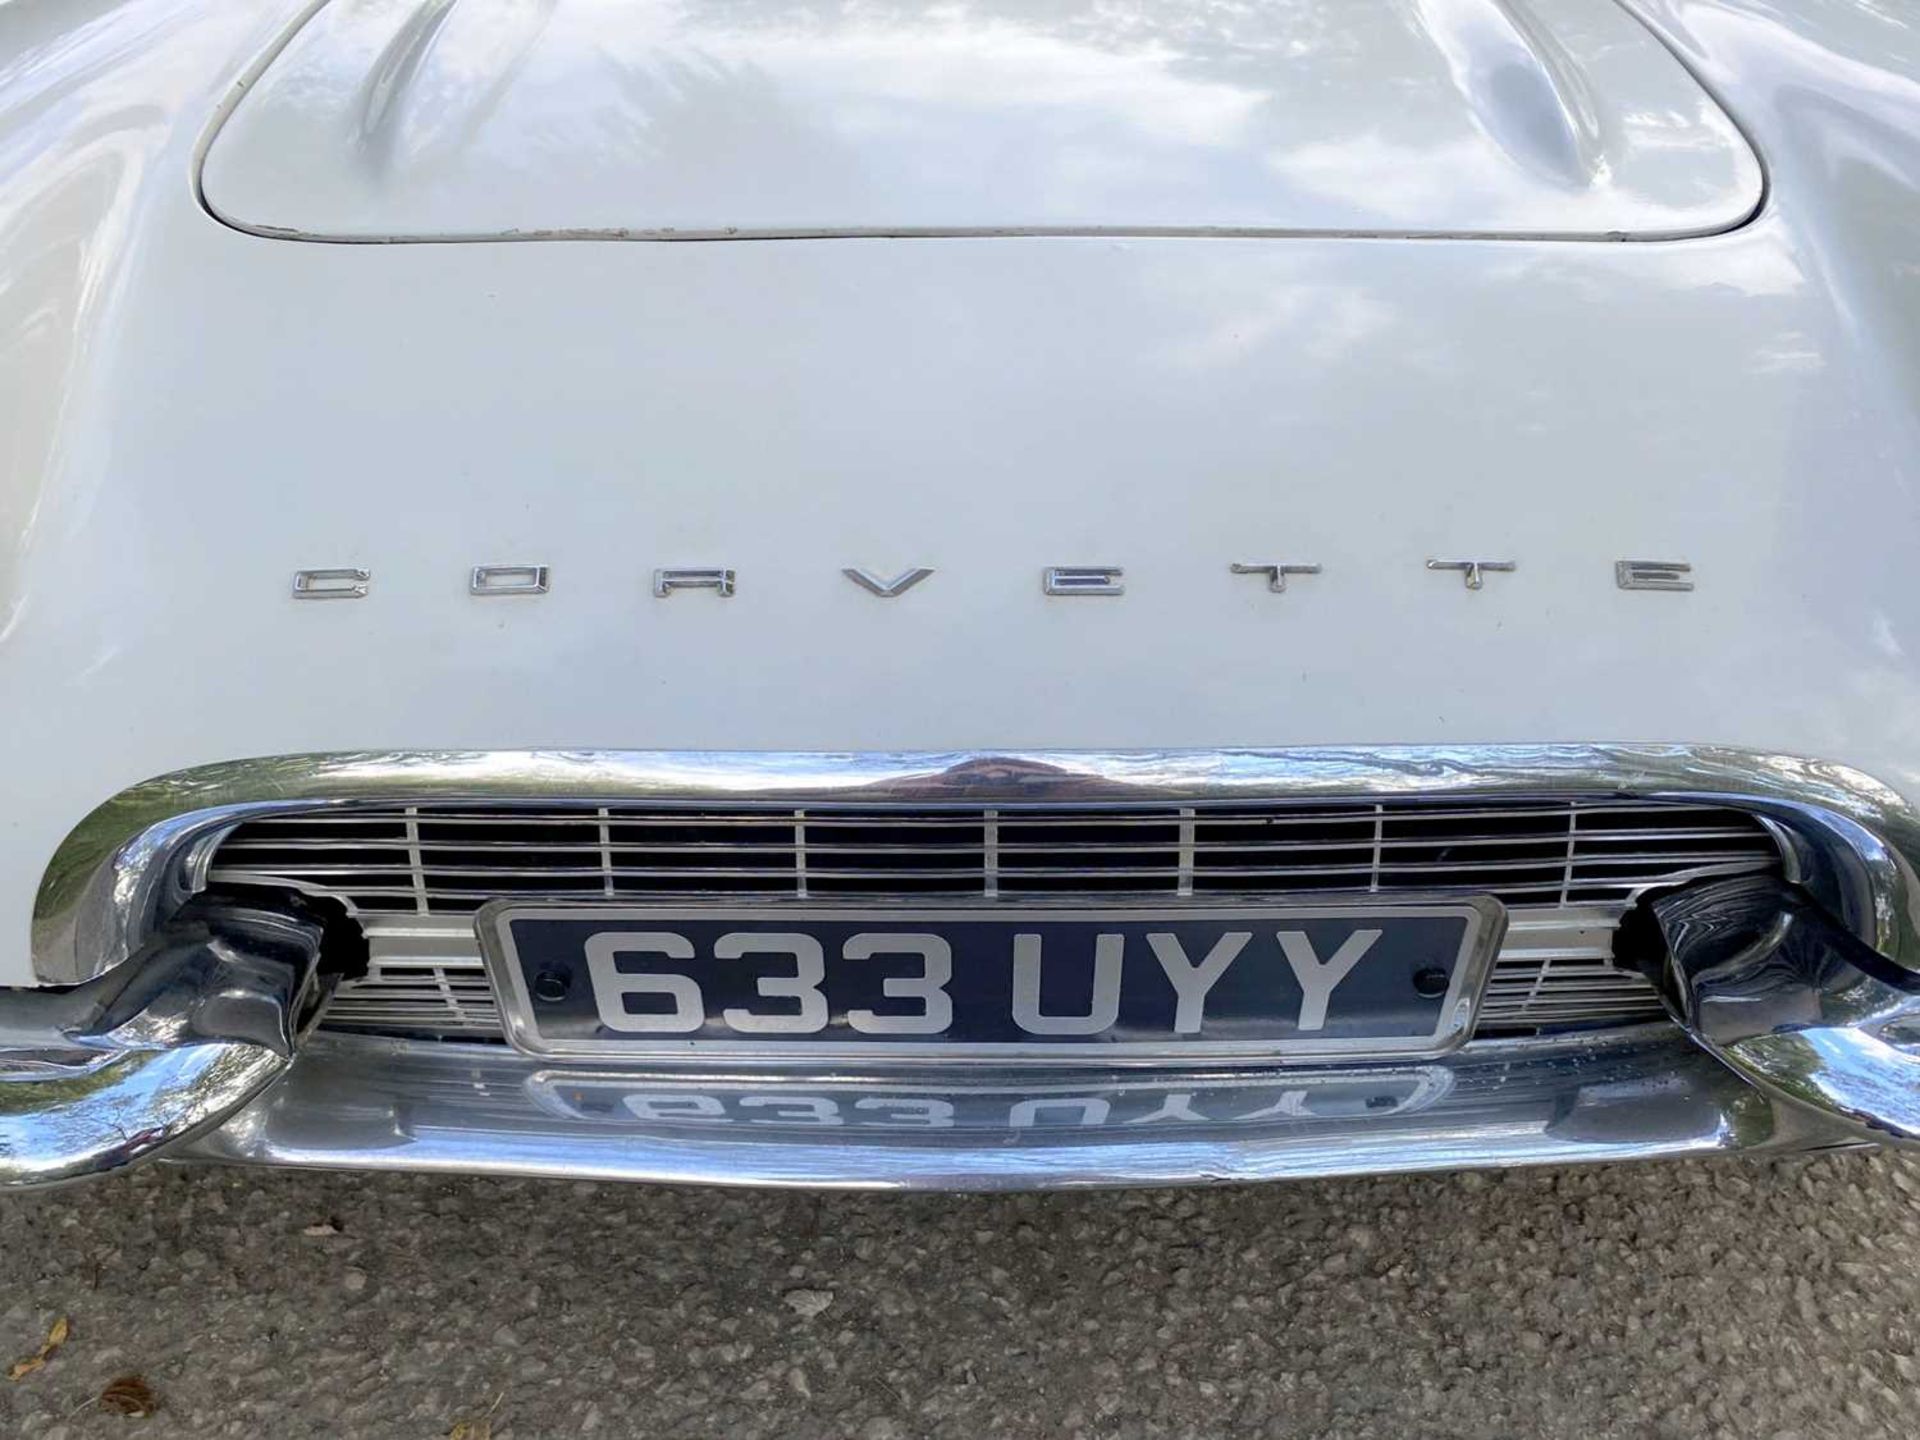 1961 Chevrolet Corvette Engine upgraded to a 5.4L V8 - Image 83 of 95